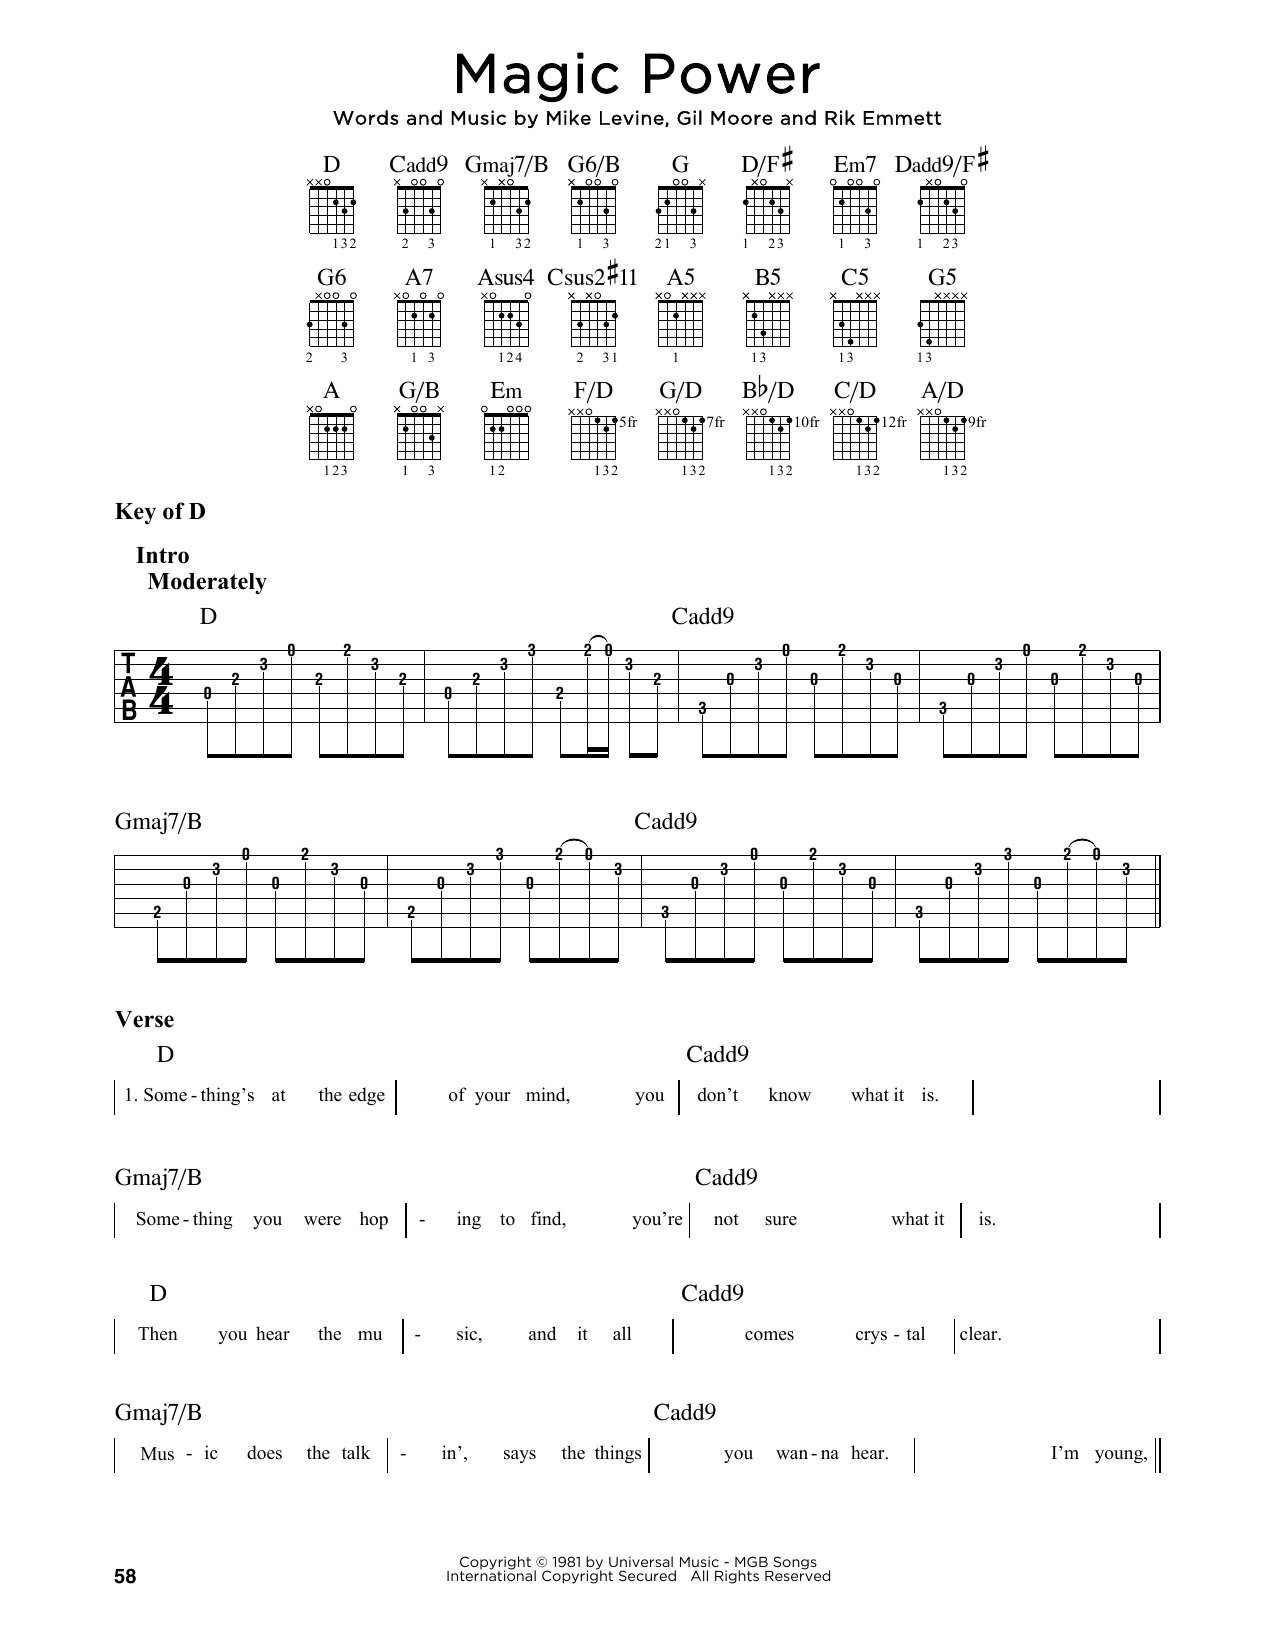 Triumph Magic Power Sheet Music Notes & Chords for Guitar Tab - Download or Print PDF